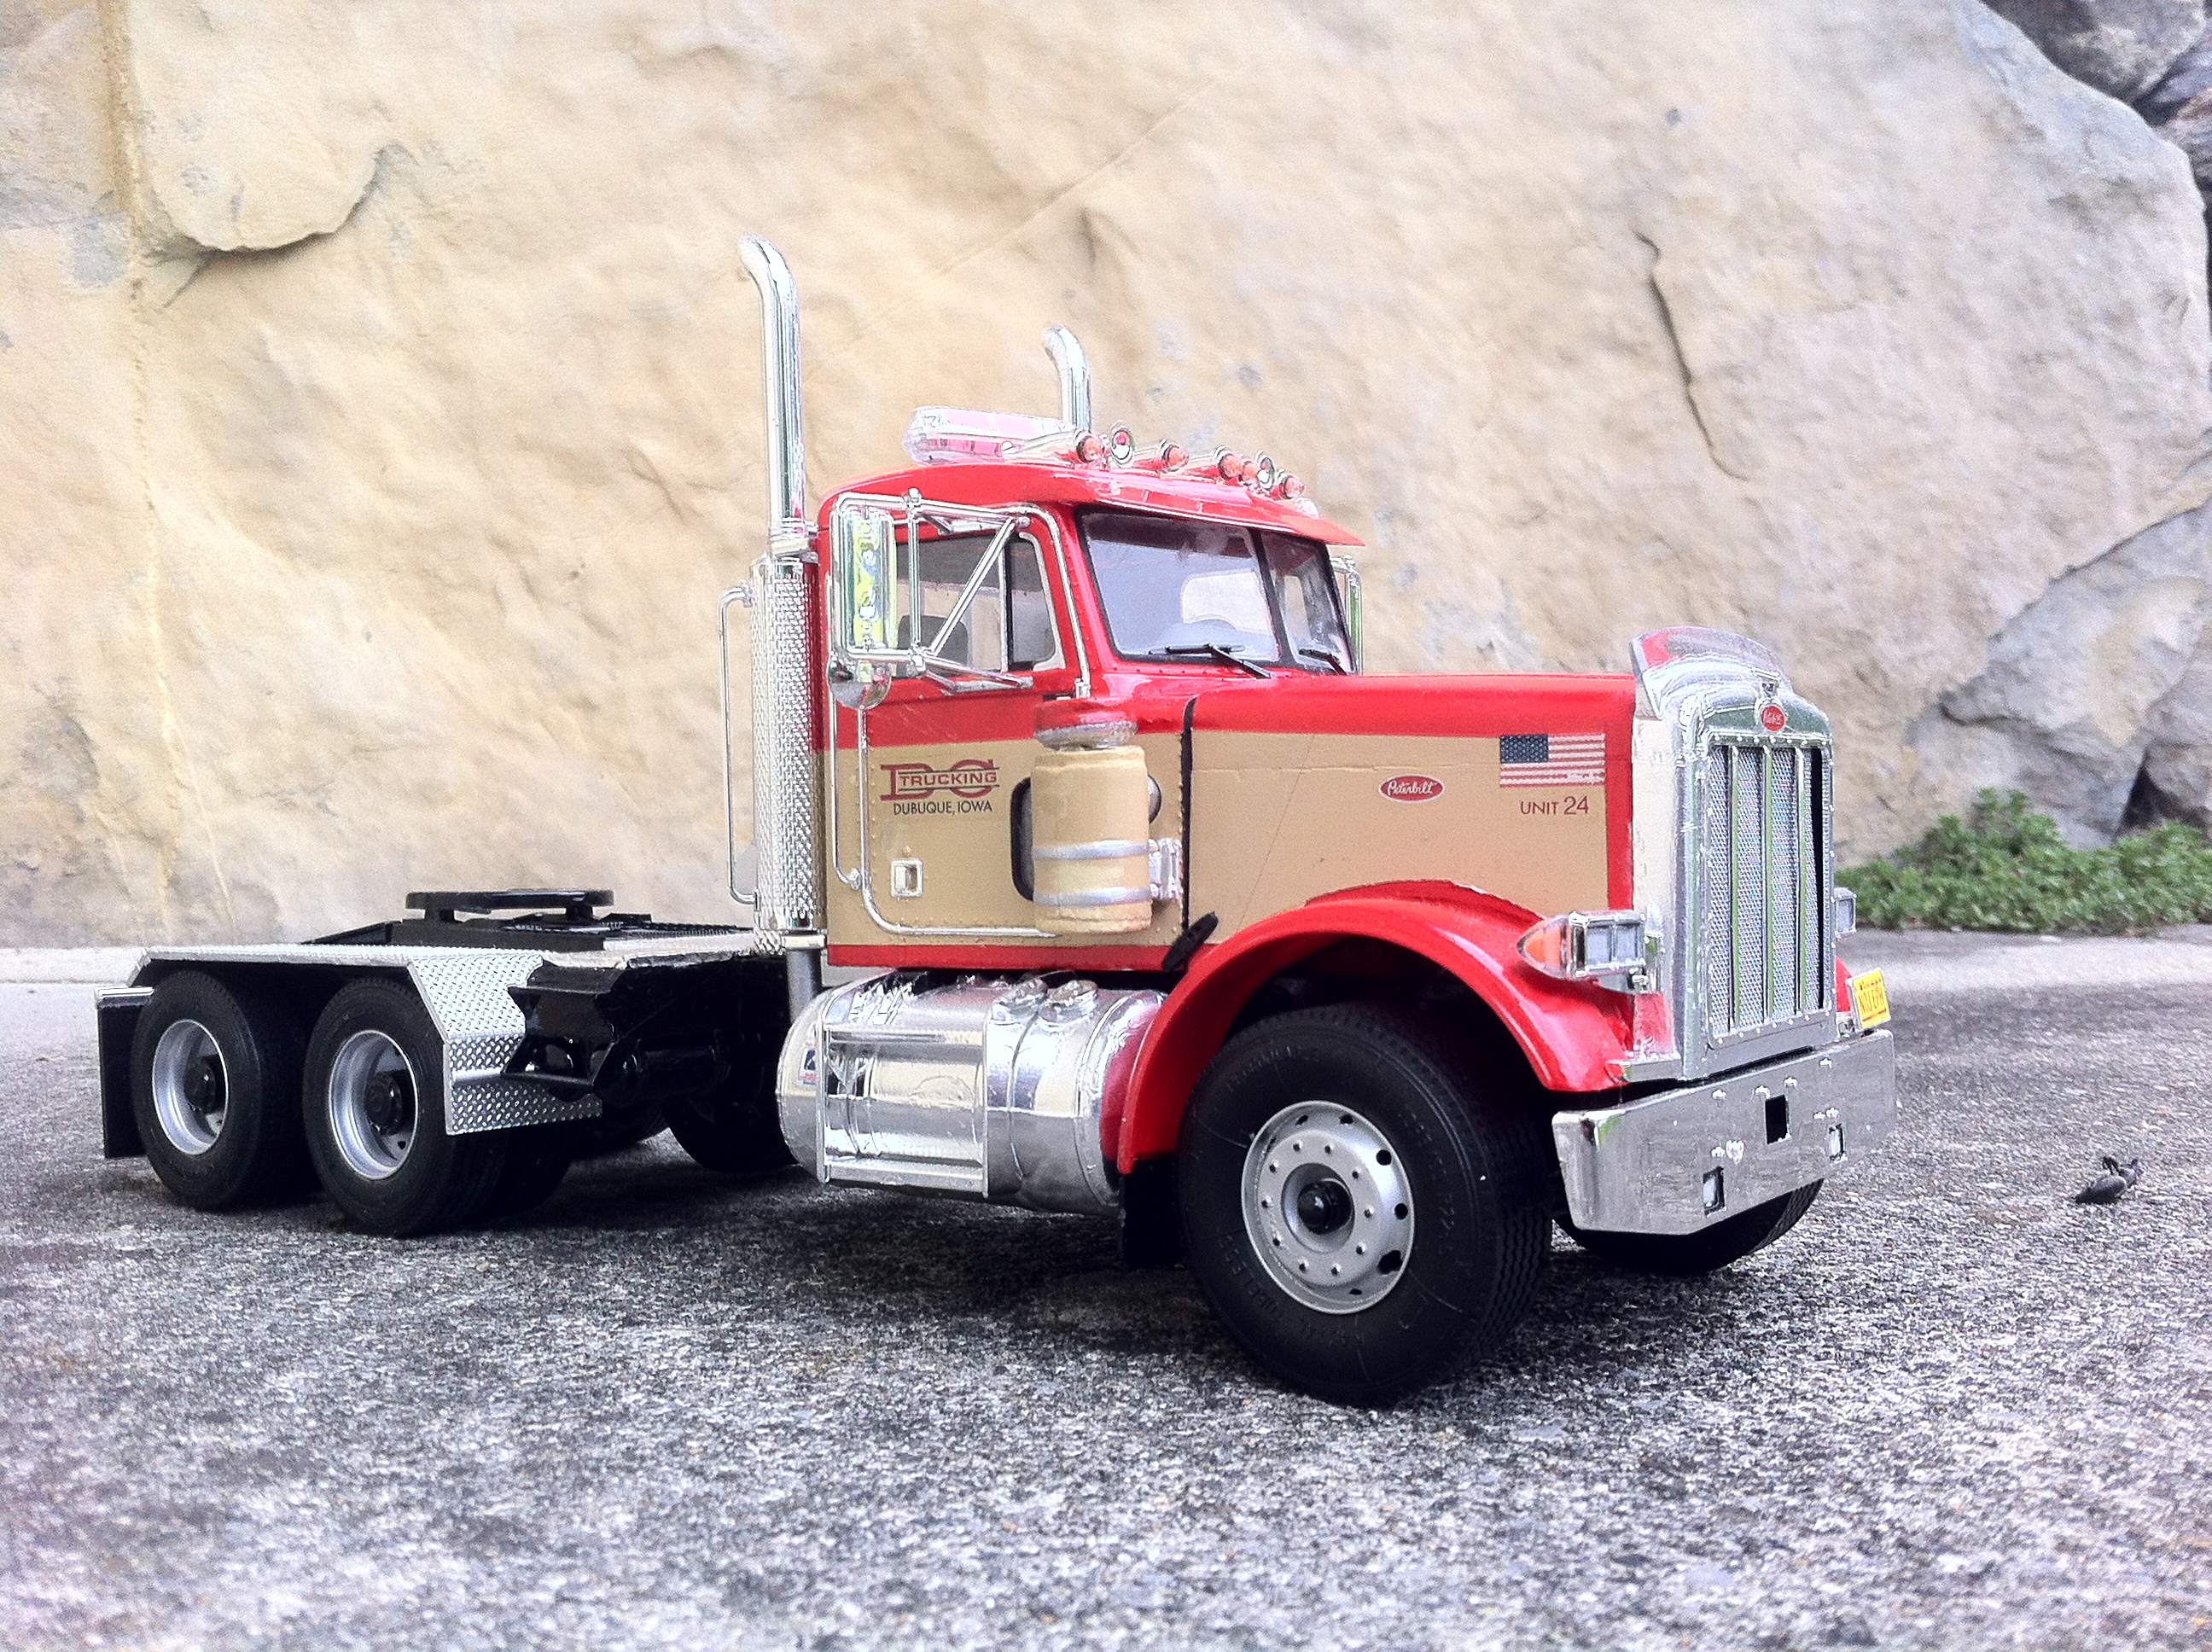 Peterbilt 359 'California Hauler' Truck Model Kit